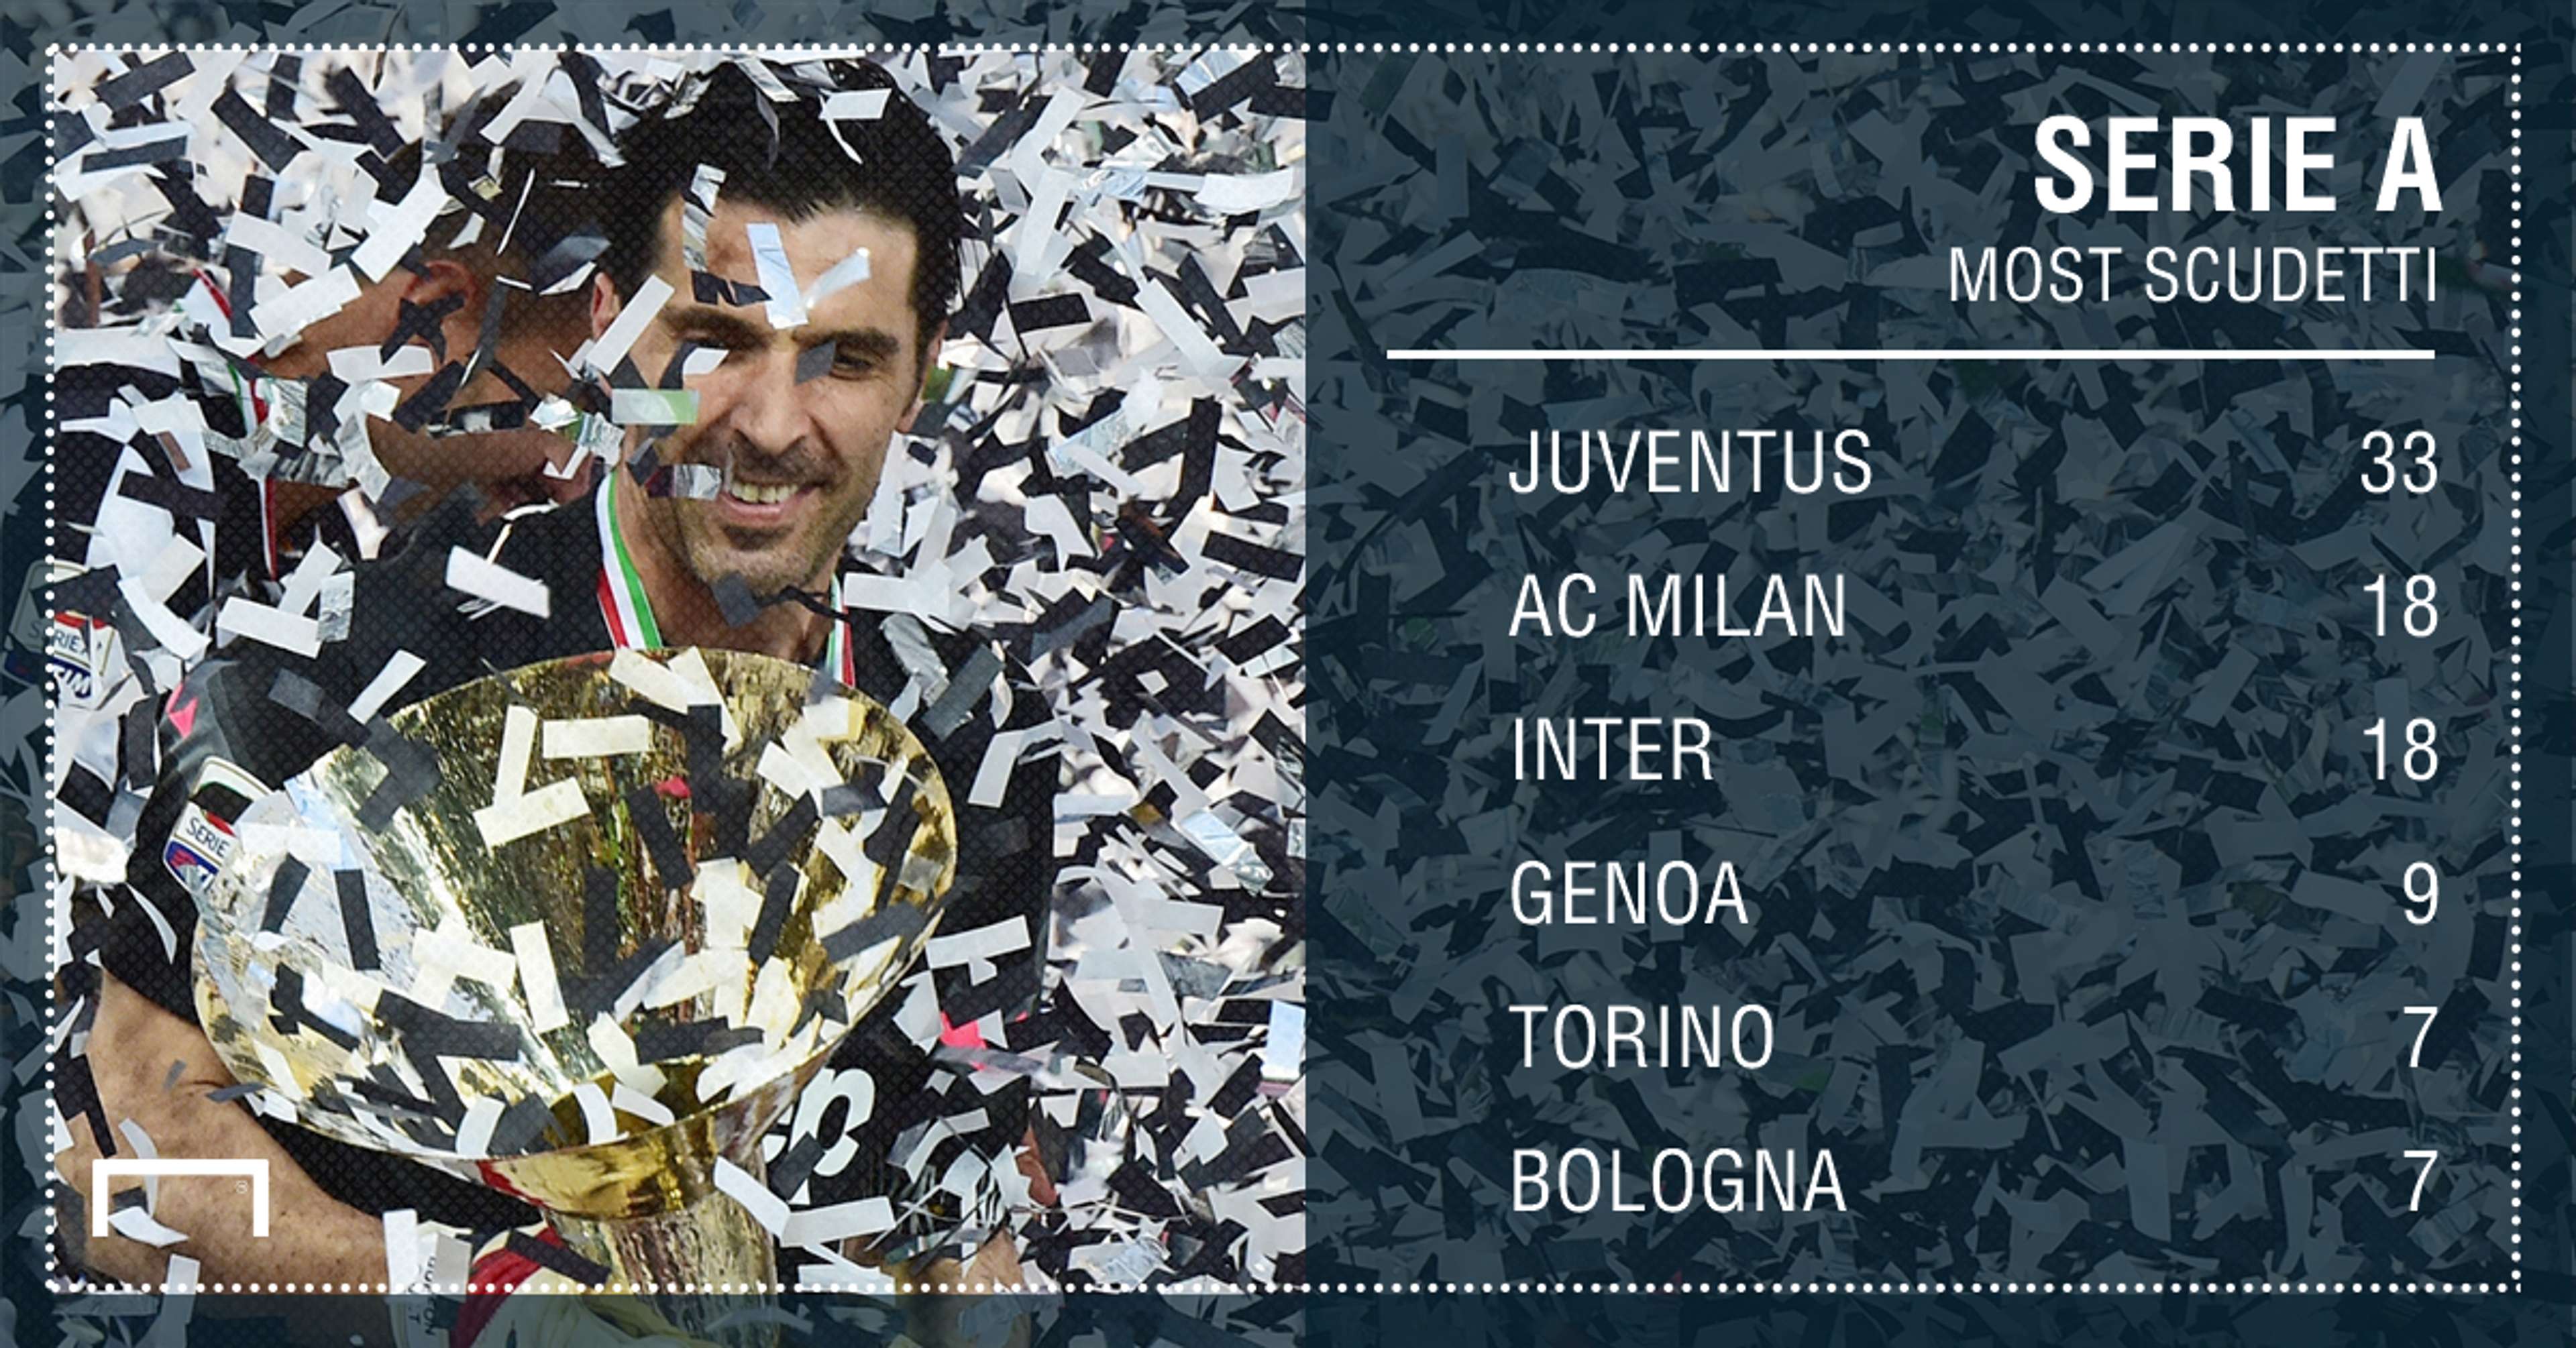 Juventus Serie A titles PS